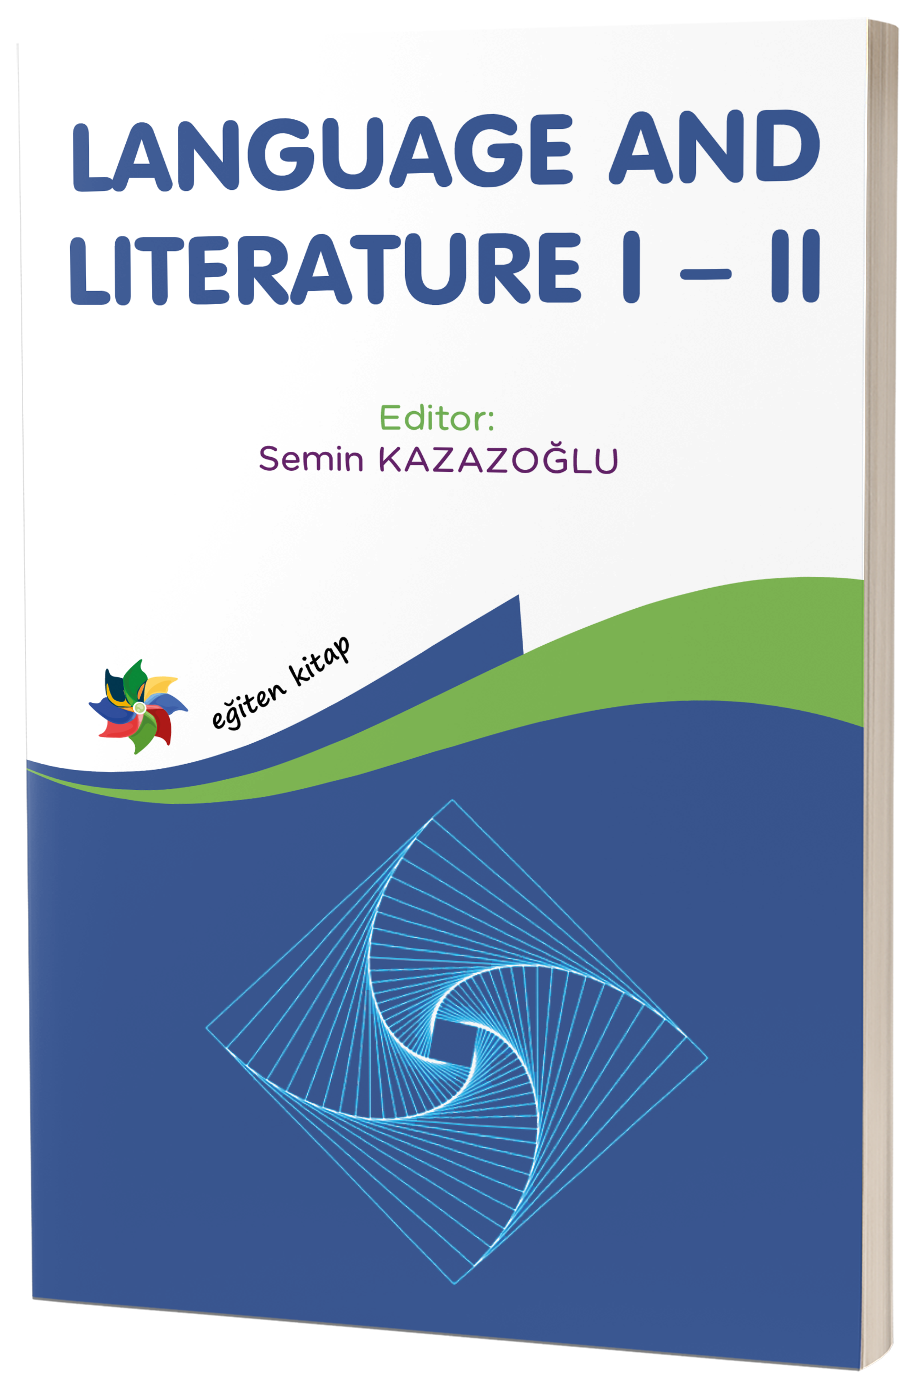 LANGUAGE AND LITERATURE I - II